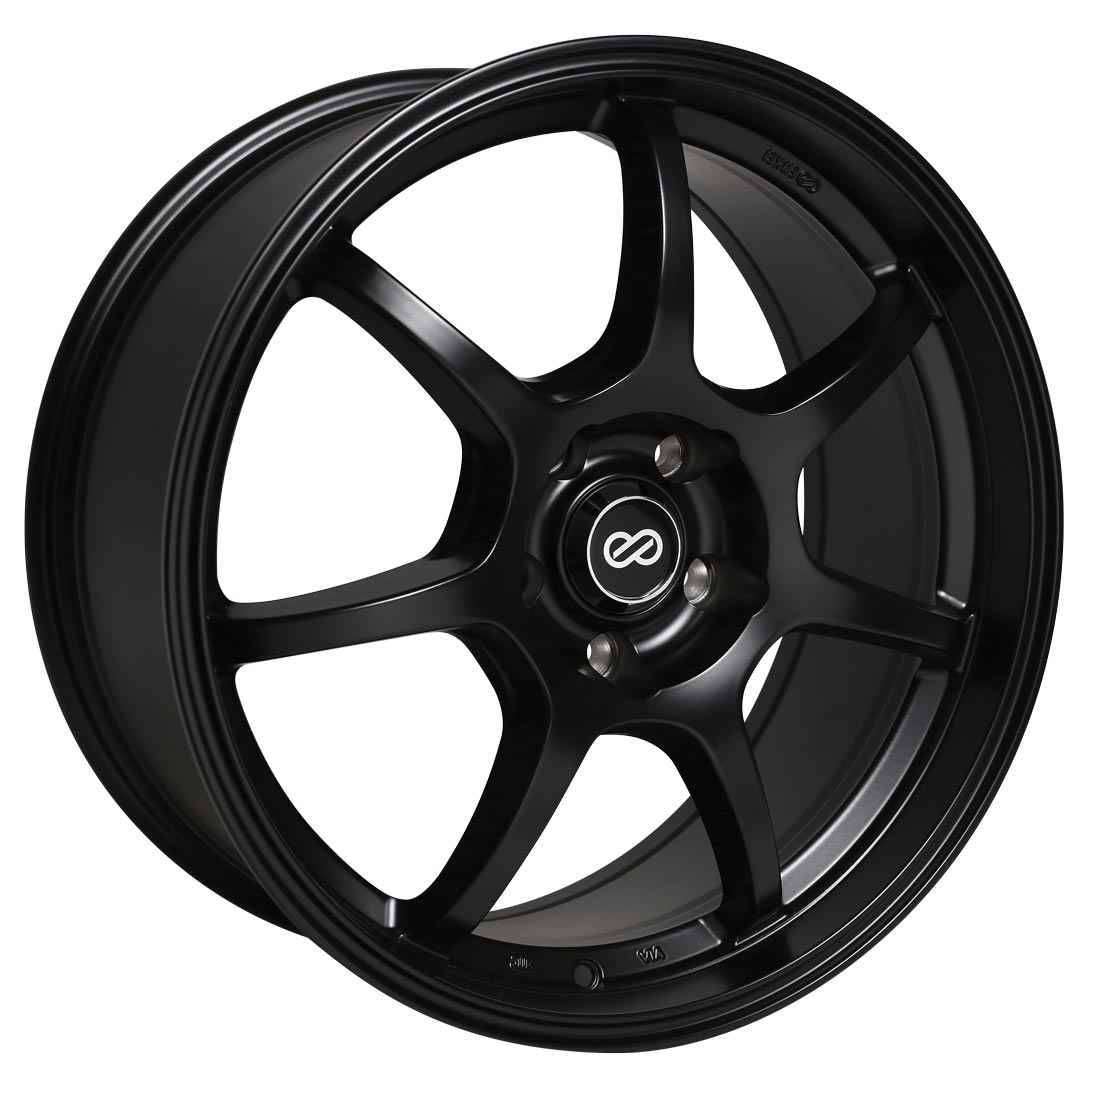 Enkei GT7 Wheel Black 17x7.5 +50 5x114.3 488-775-6550BK